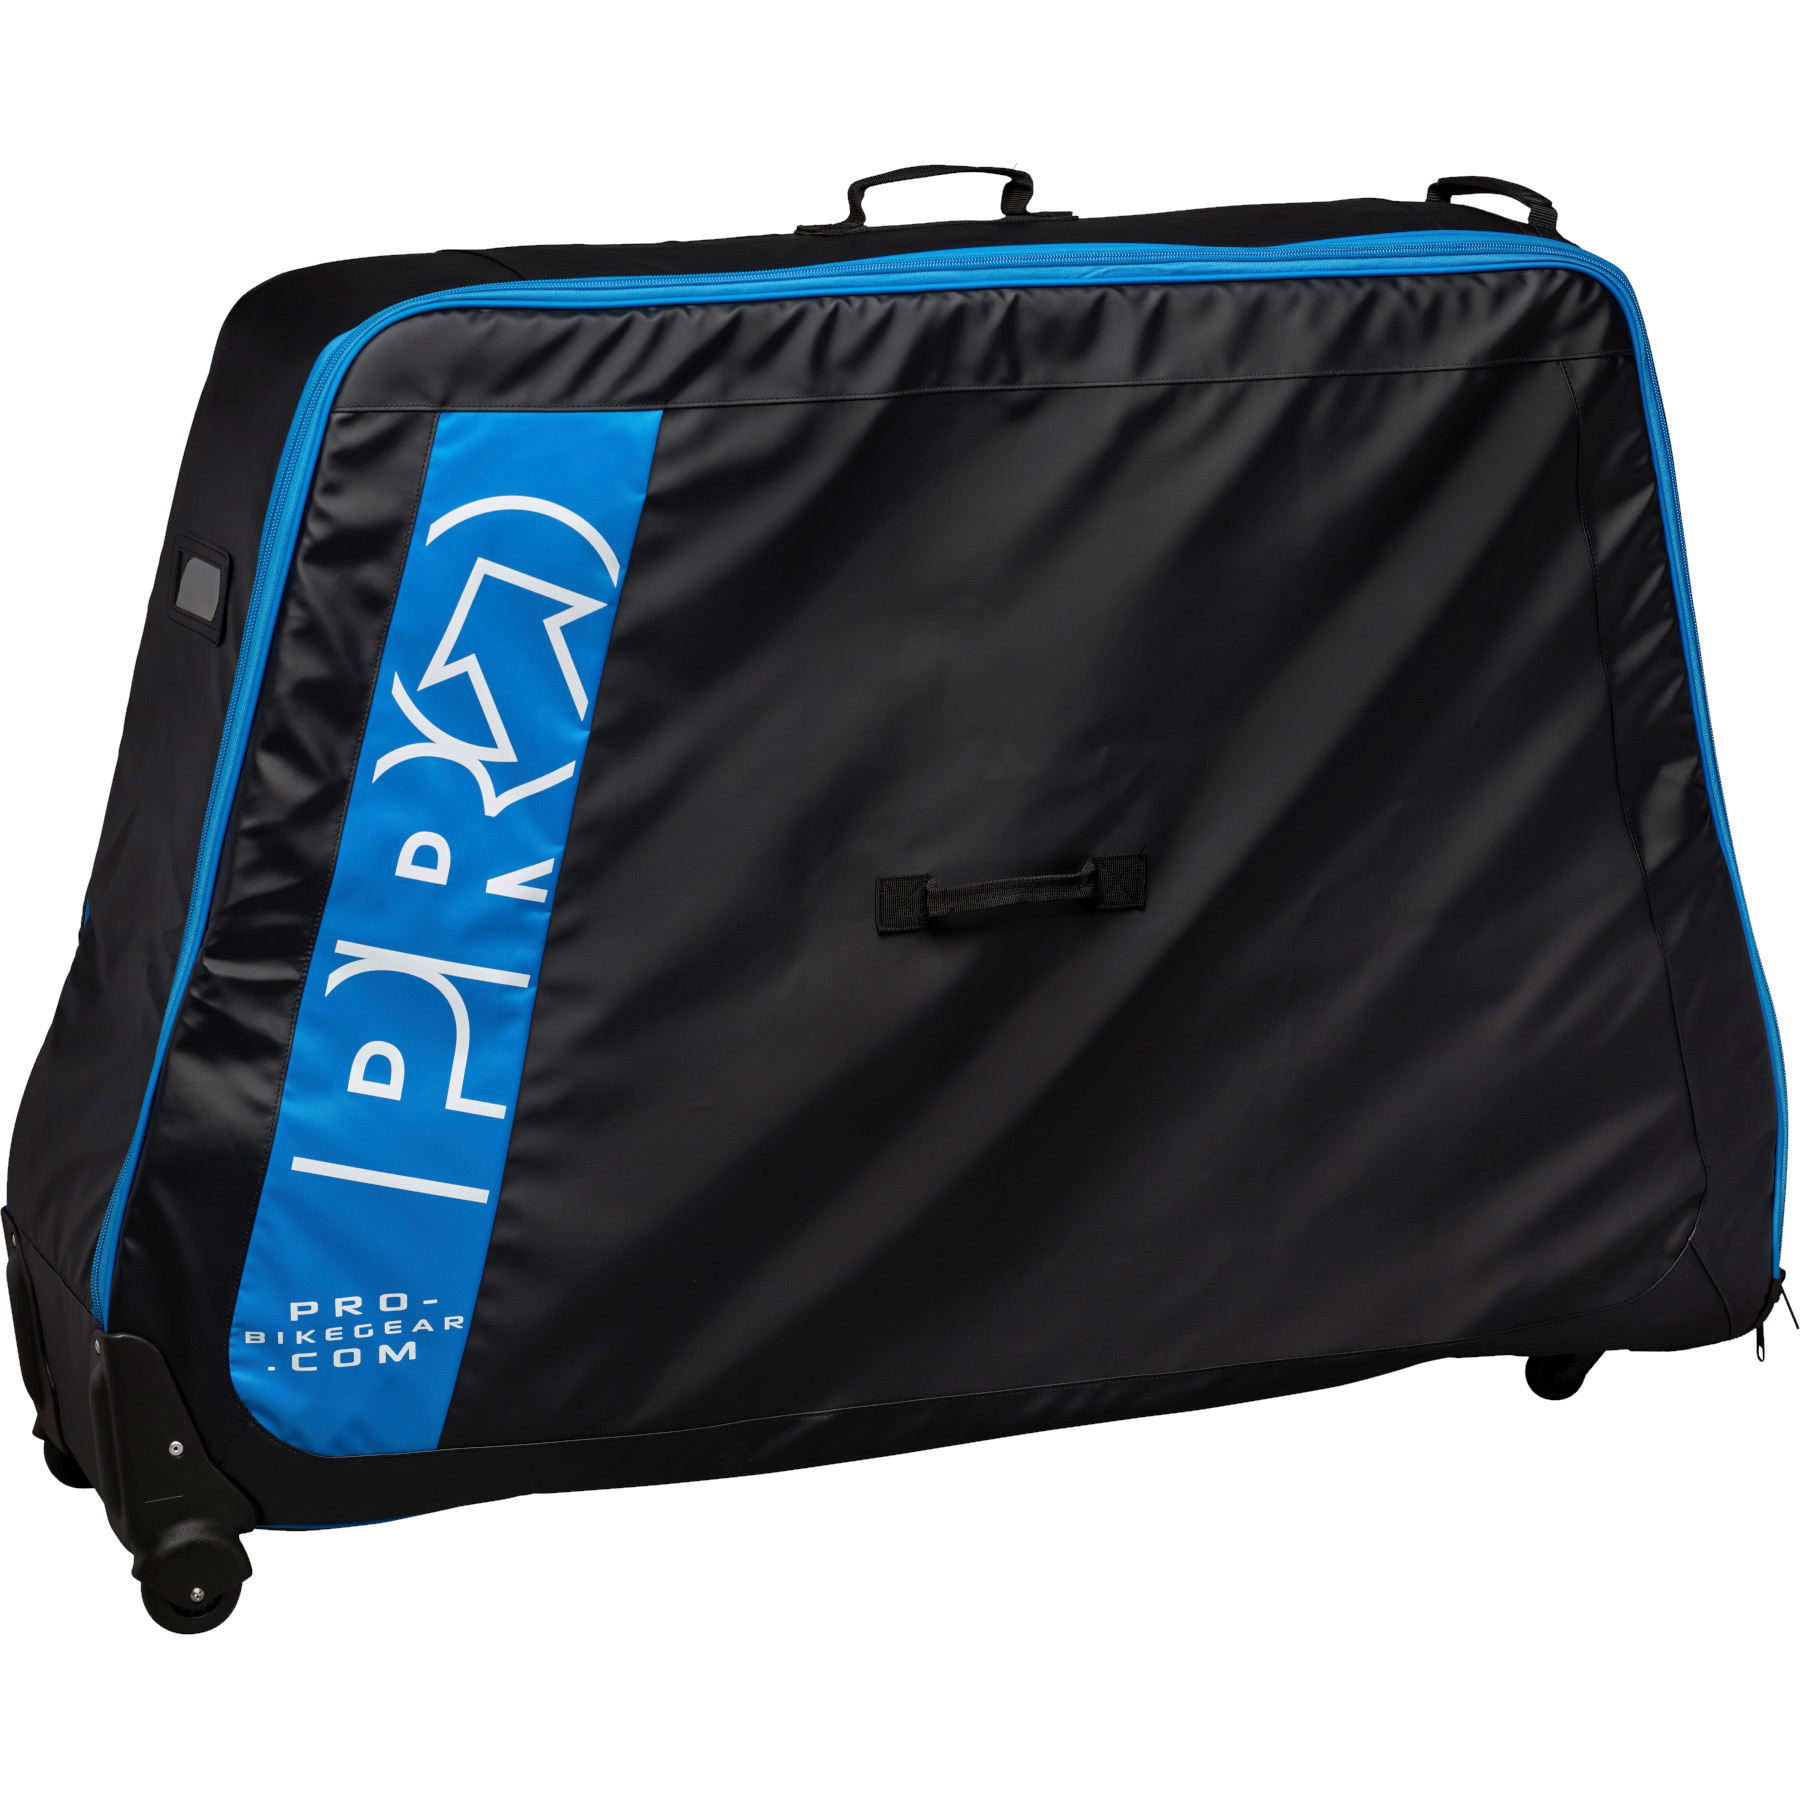 Productfoto van PRO Mega Bicycle Suitcase - black